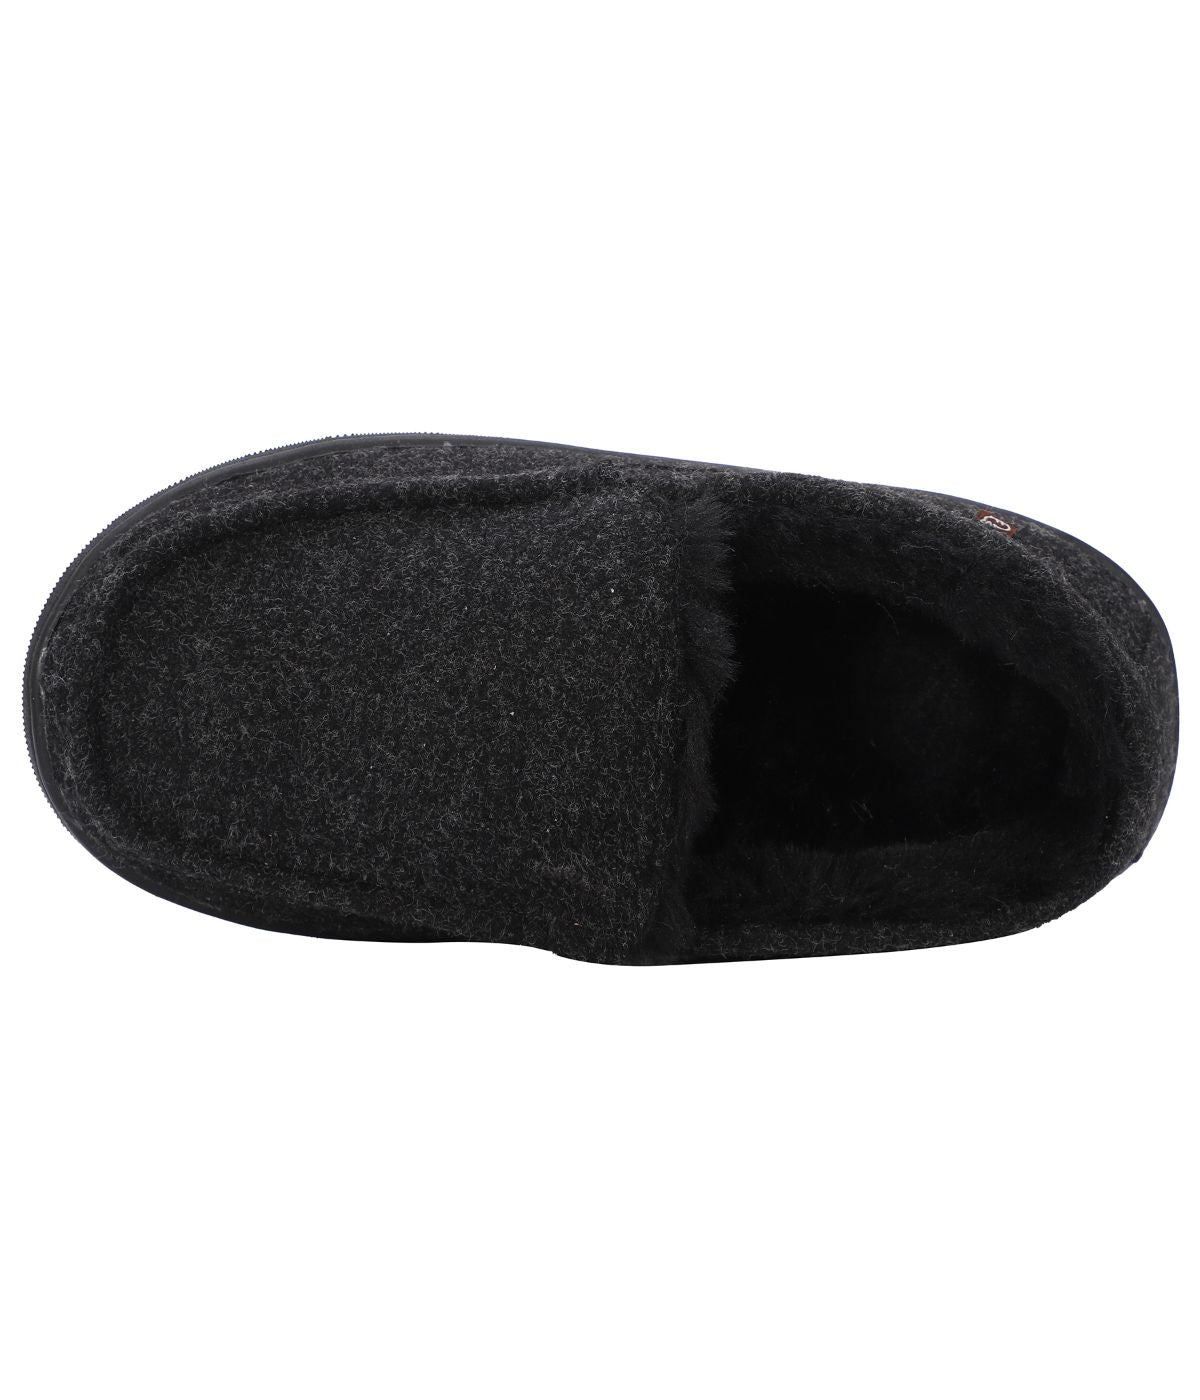 Men's suede Moc slipper with fur lining Black Wool